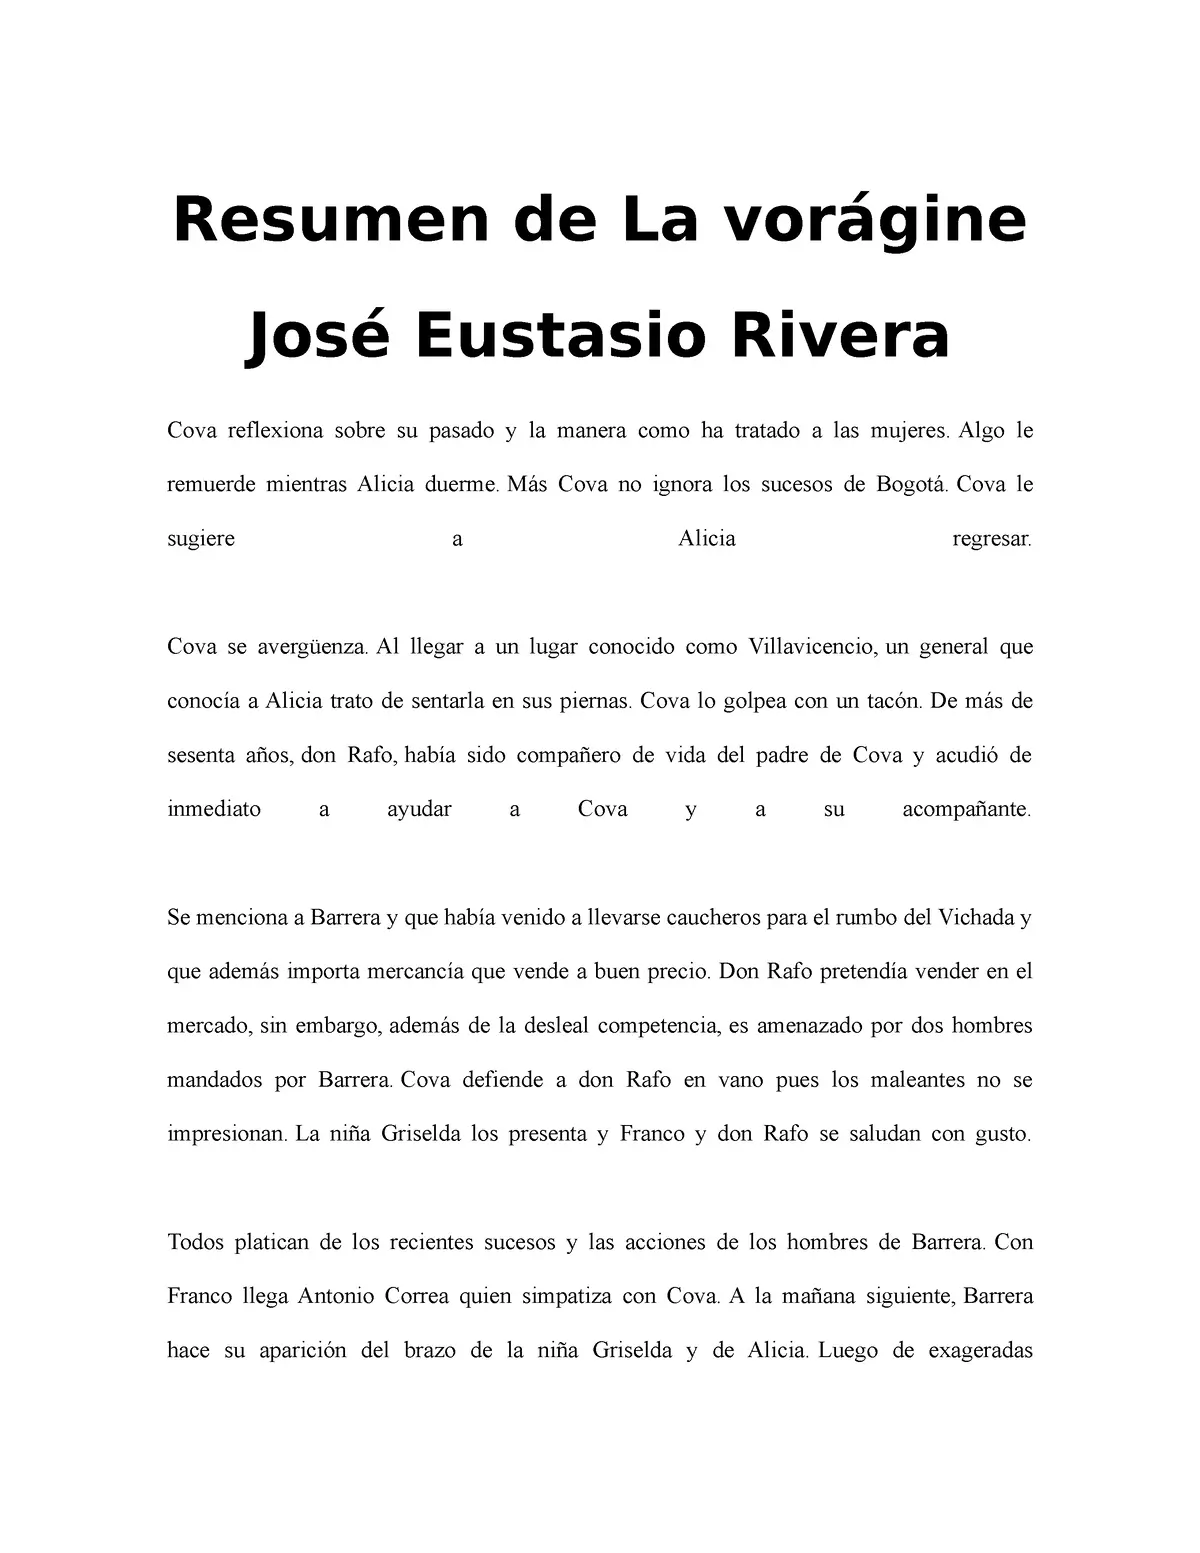 la voragine jose eustasio rivera resumen - Cuál es la labor de José Eustasio Rivera en La vorágine